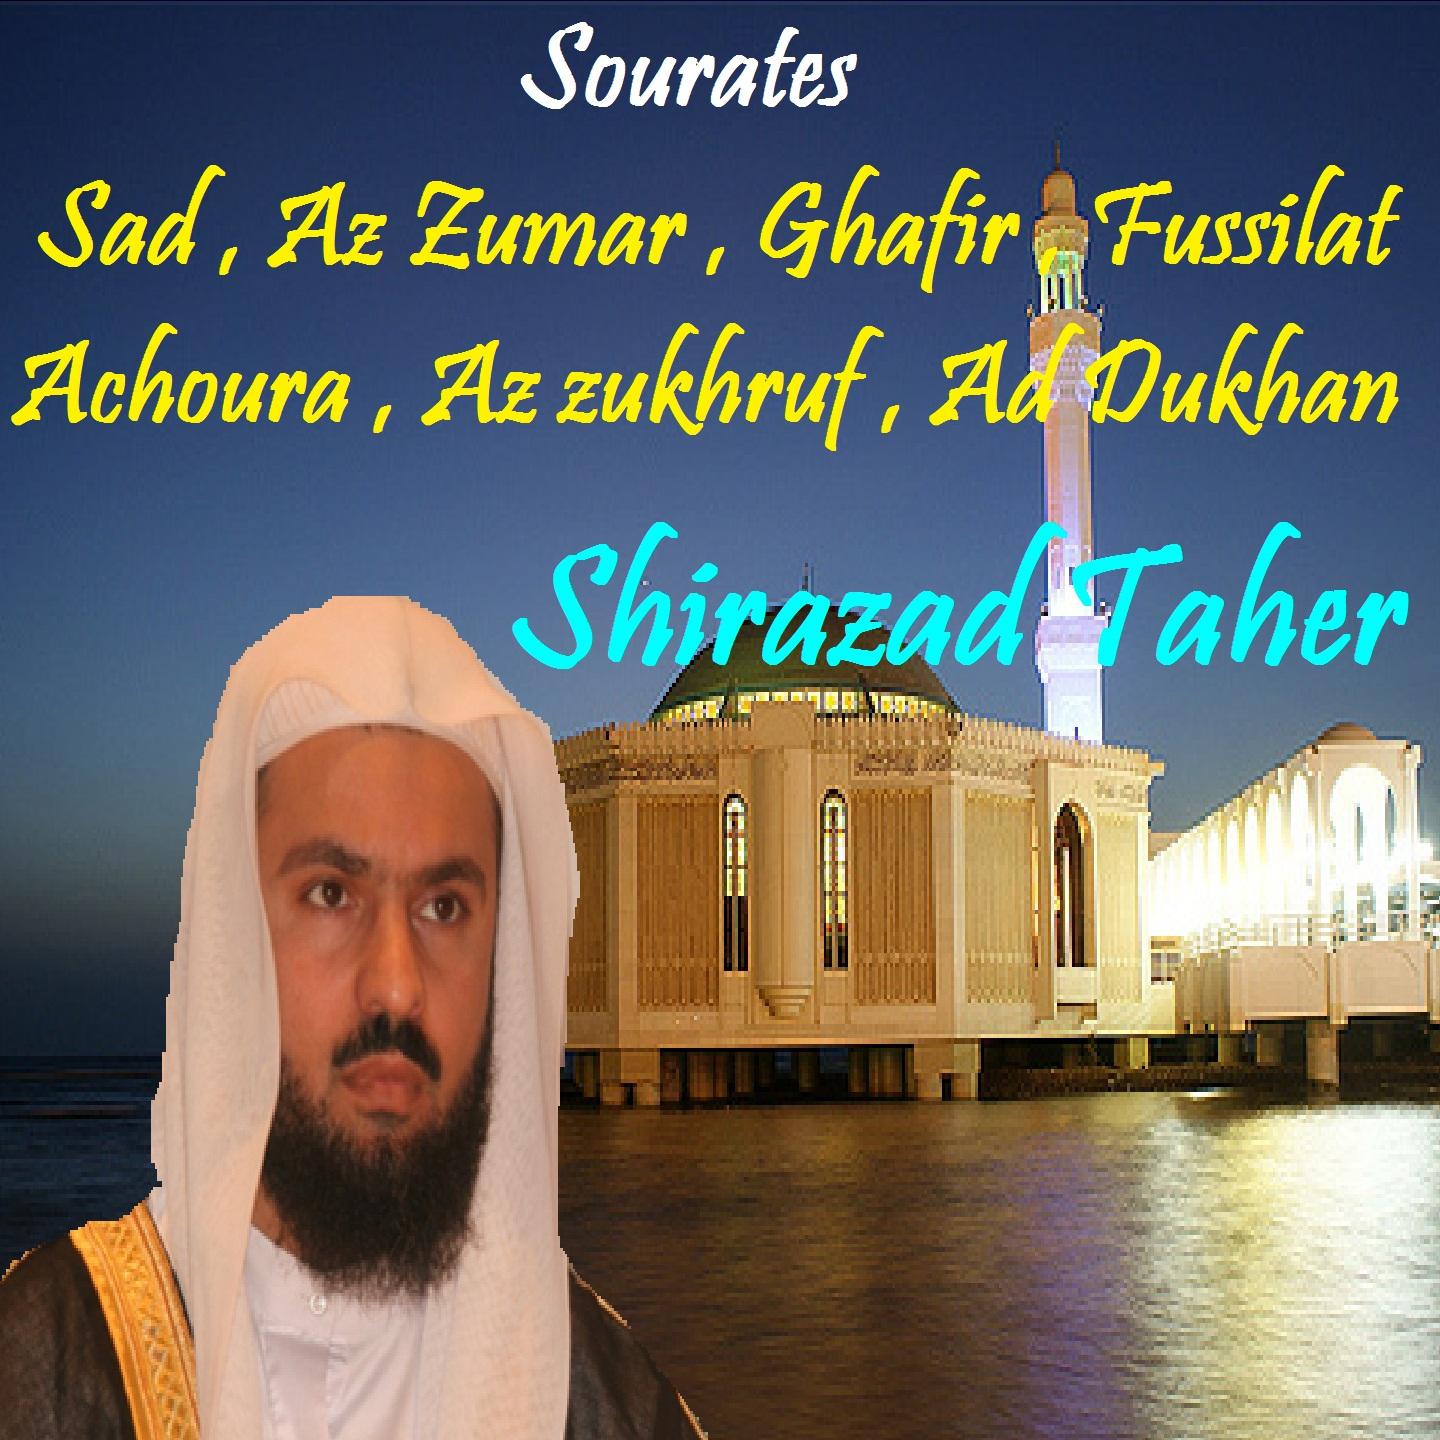 Постер альбома Sourates Sad , Az Zumar , Ghafir , Fussilat , Achoura , Az zukhruf , Ad Dukhan